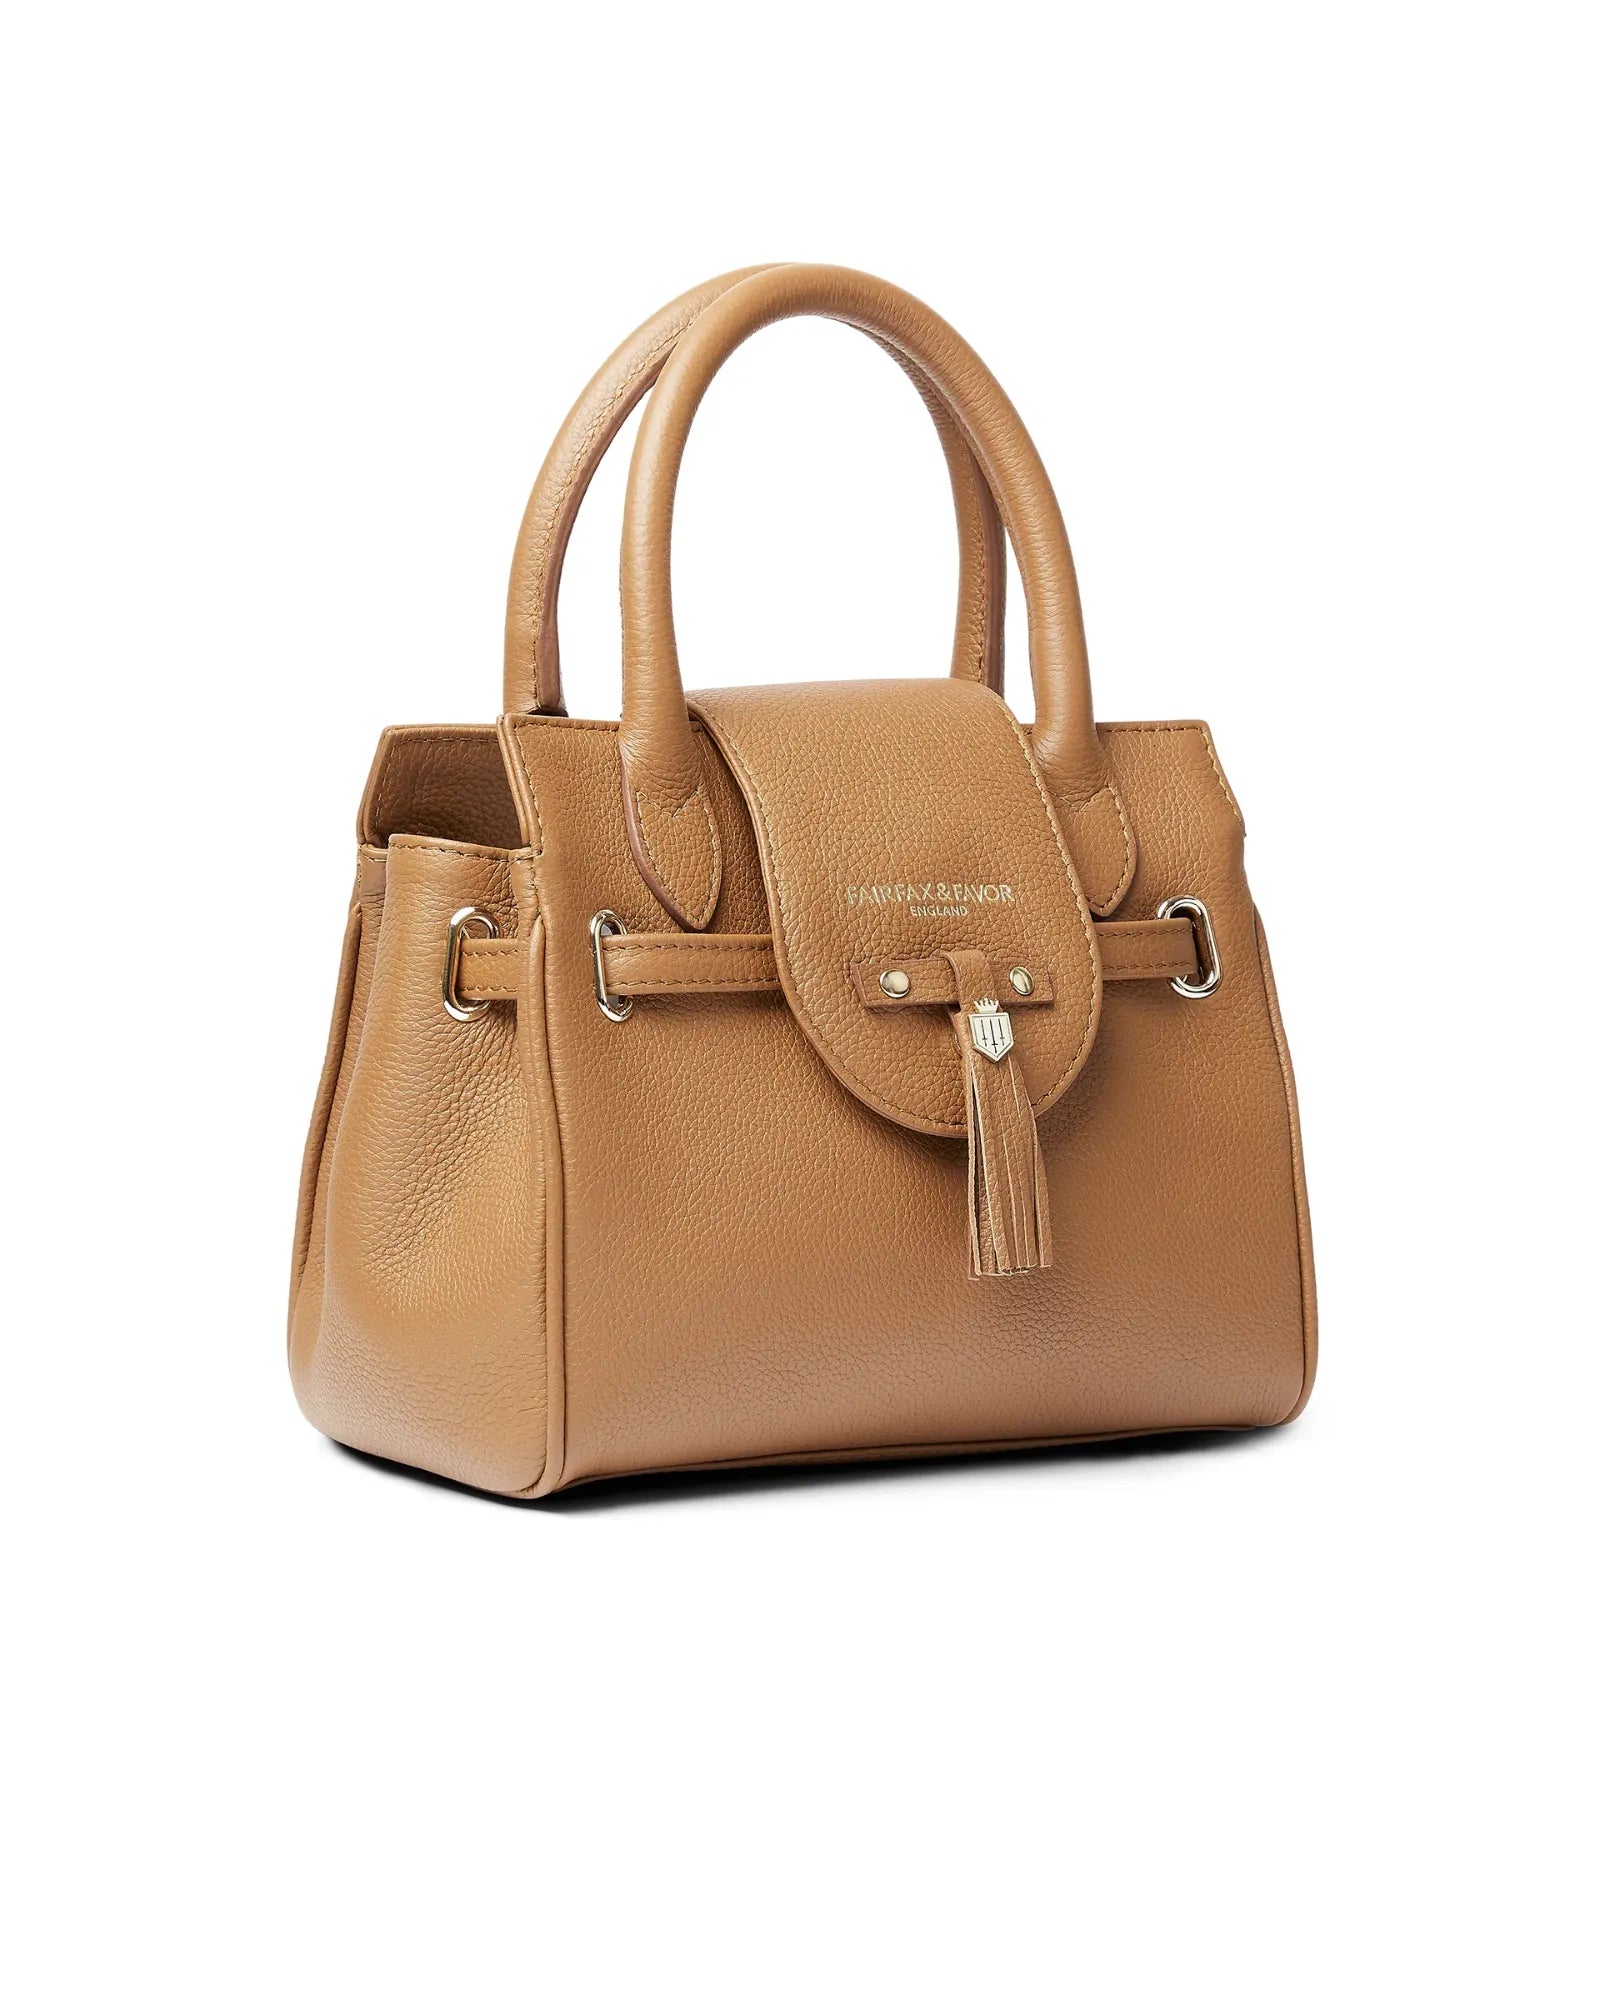 The Mini Windsor Handbag in Pebbled Tan Leather